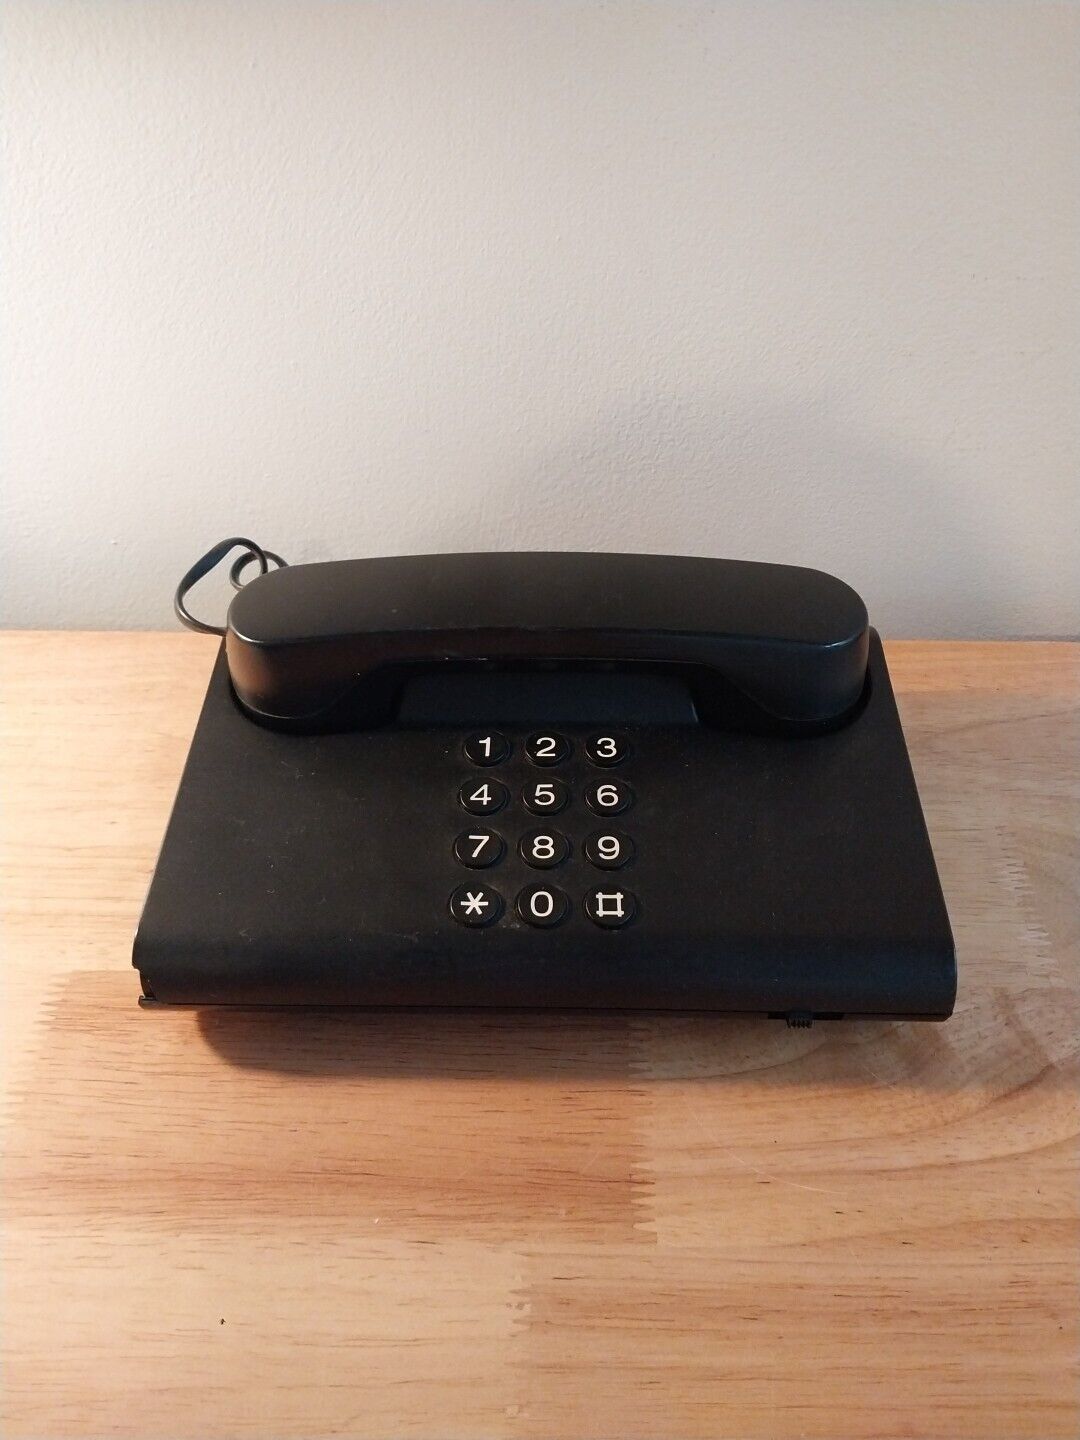 Danmark Retro Vintage Danish 1980s Black Desk Landline Phone.  Works